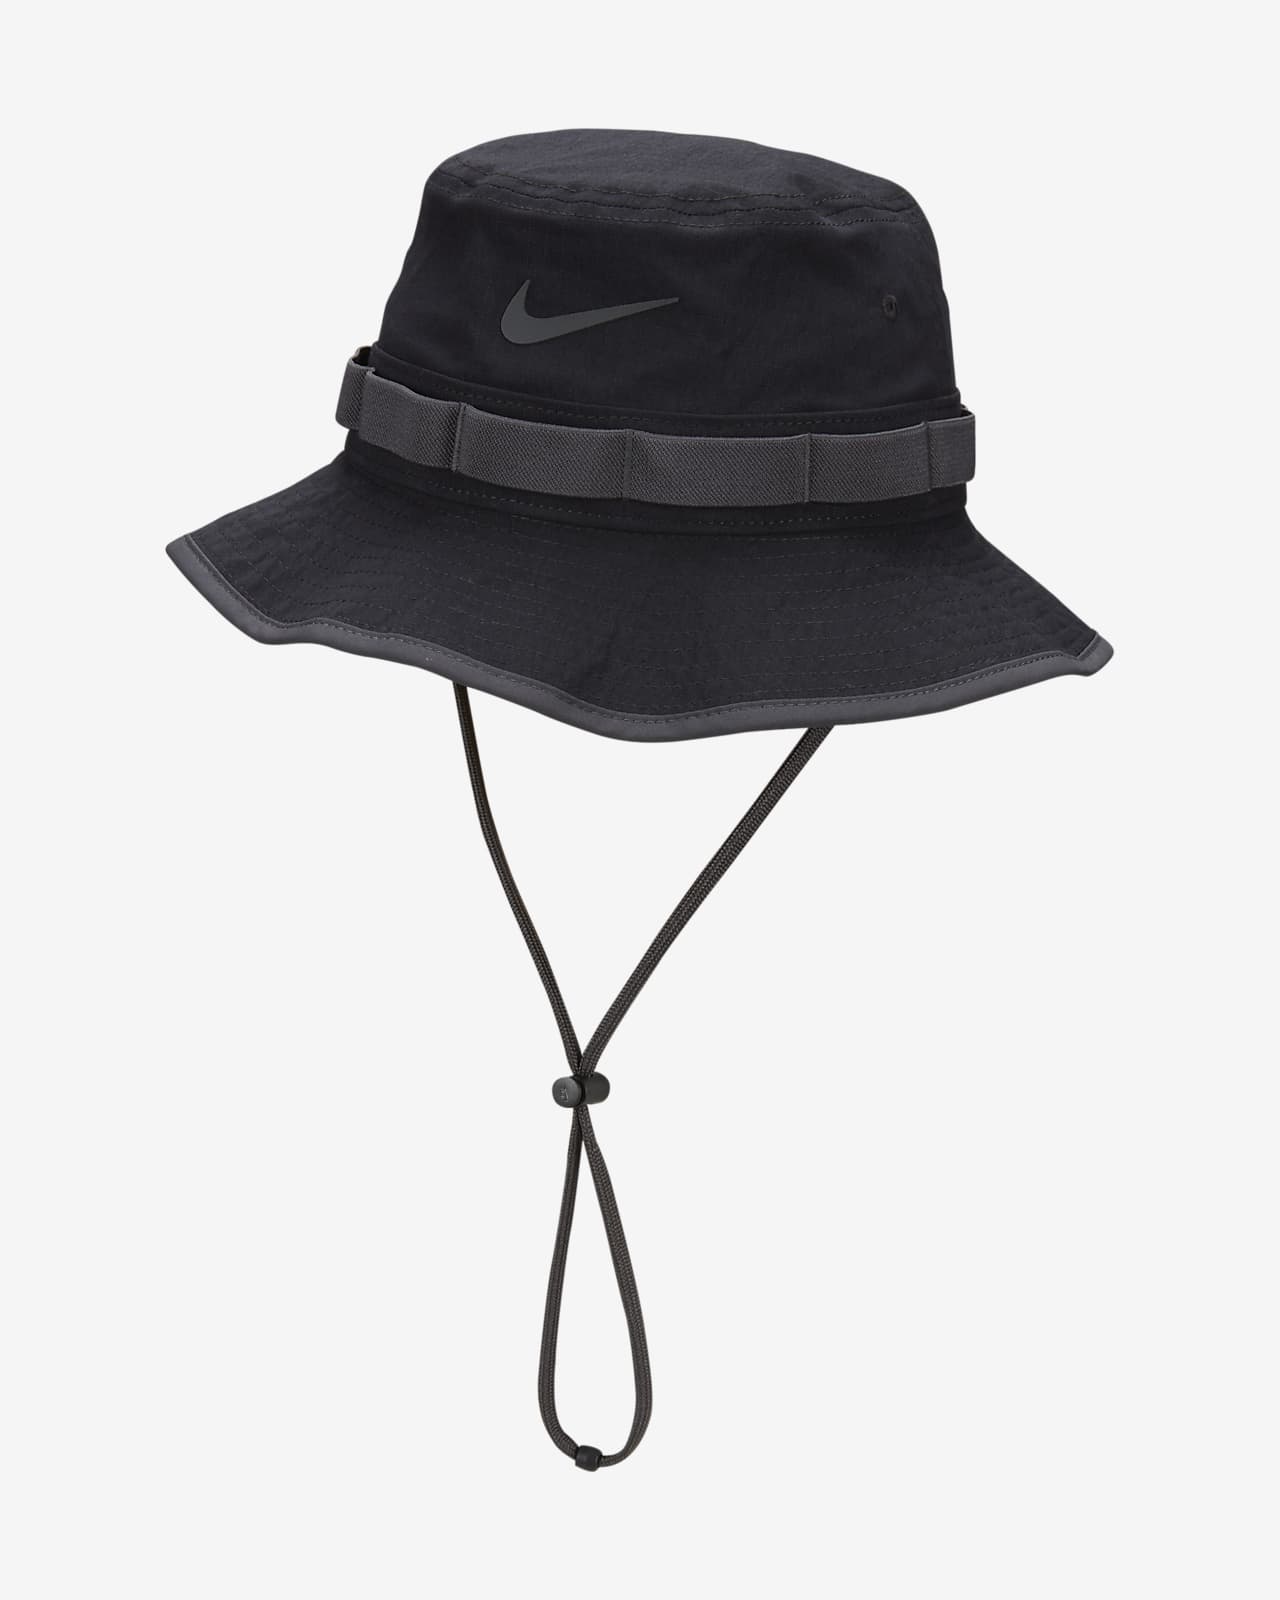 Nike Dri-FIT Apex Bucket Hat Black/Anthracite S